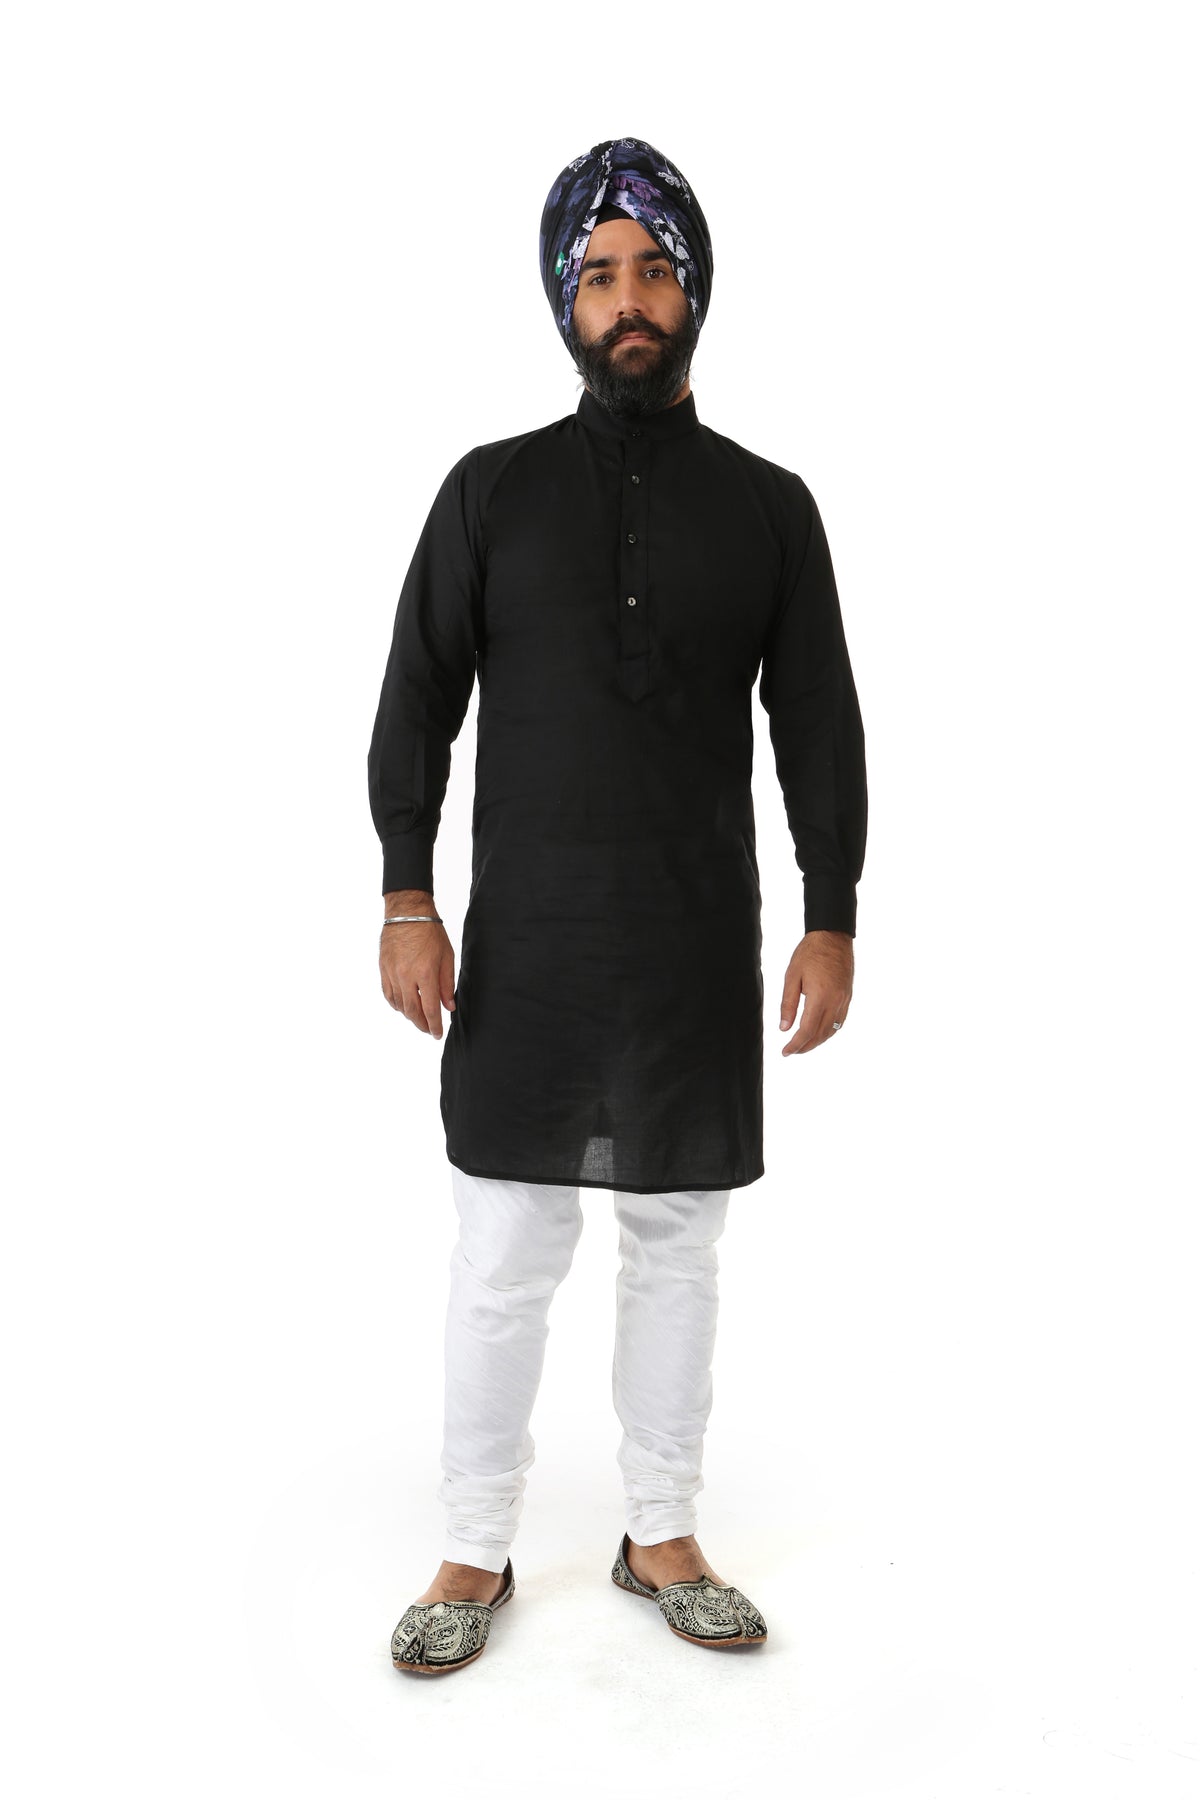 RAAYA Classic Cotton Kurta Shirt  in Black - Front View - Harleen Kaur - Indowestern Menswear